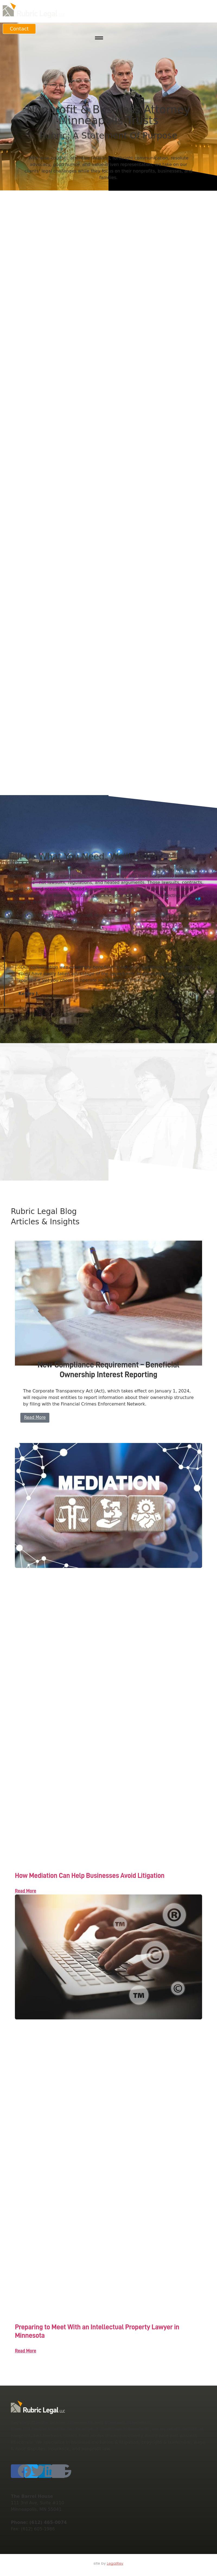 Rubric Legal LLC - Minneapolis MN Lawyers